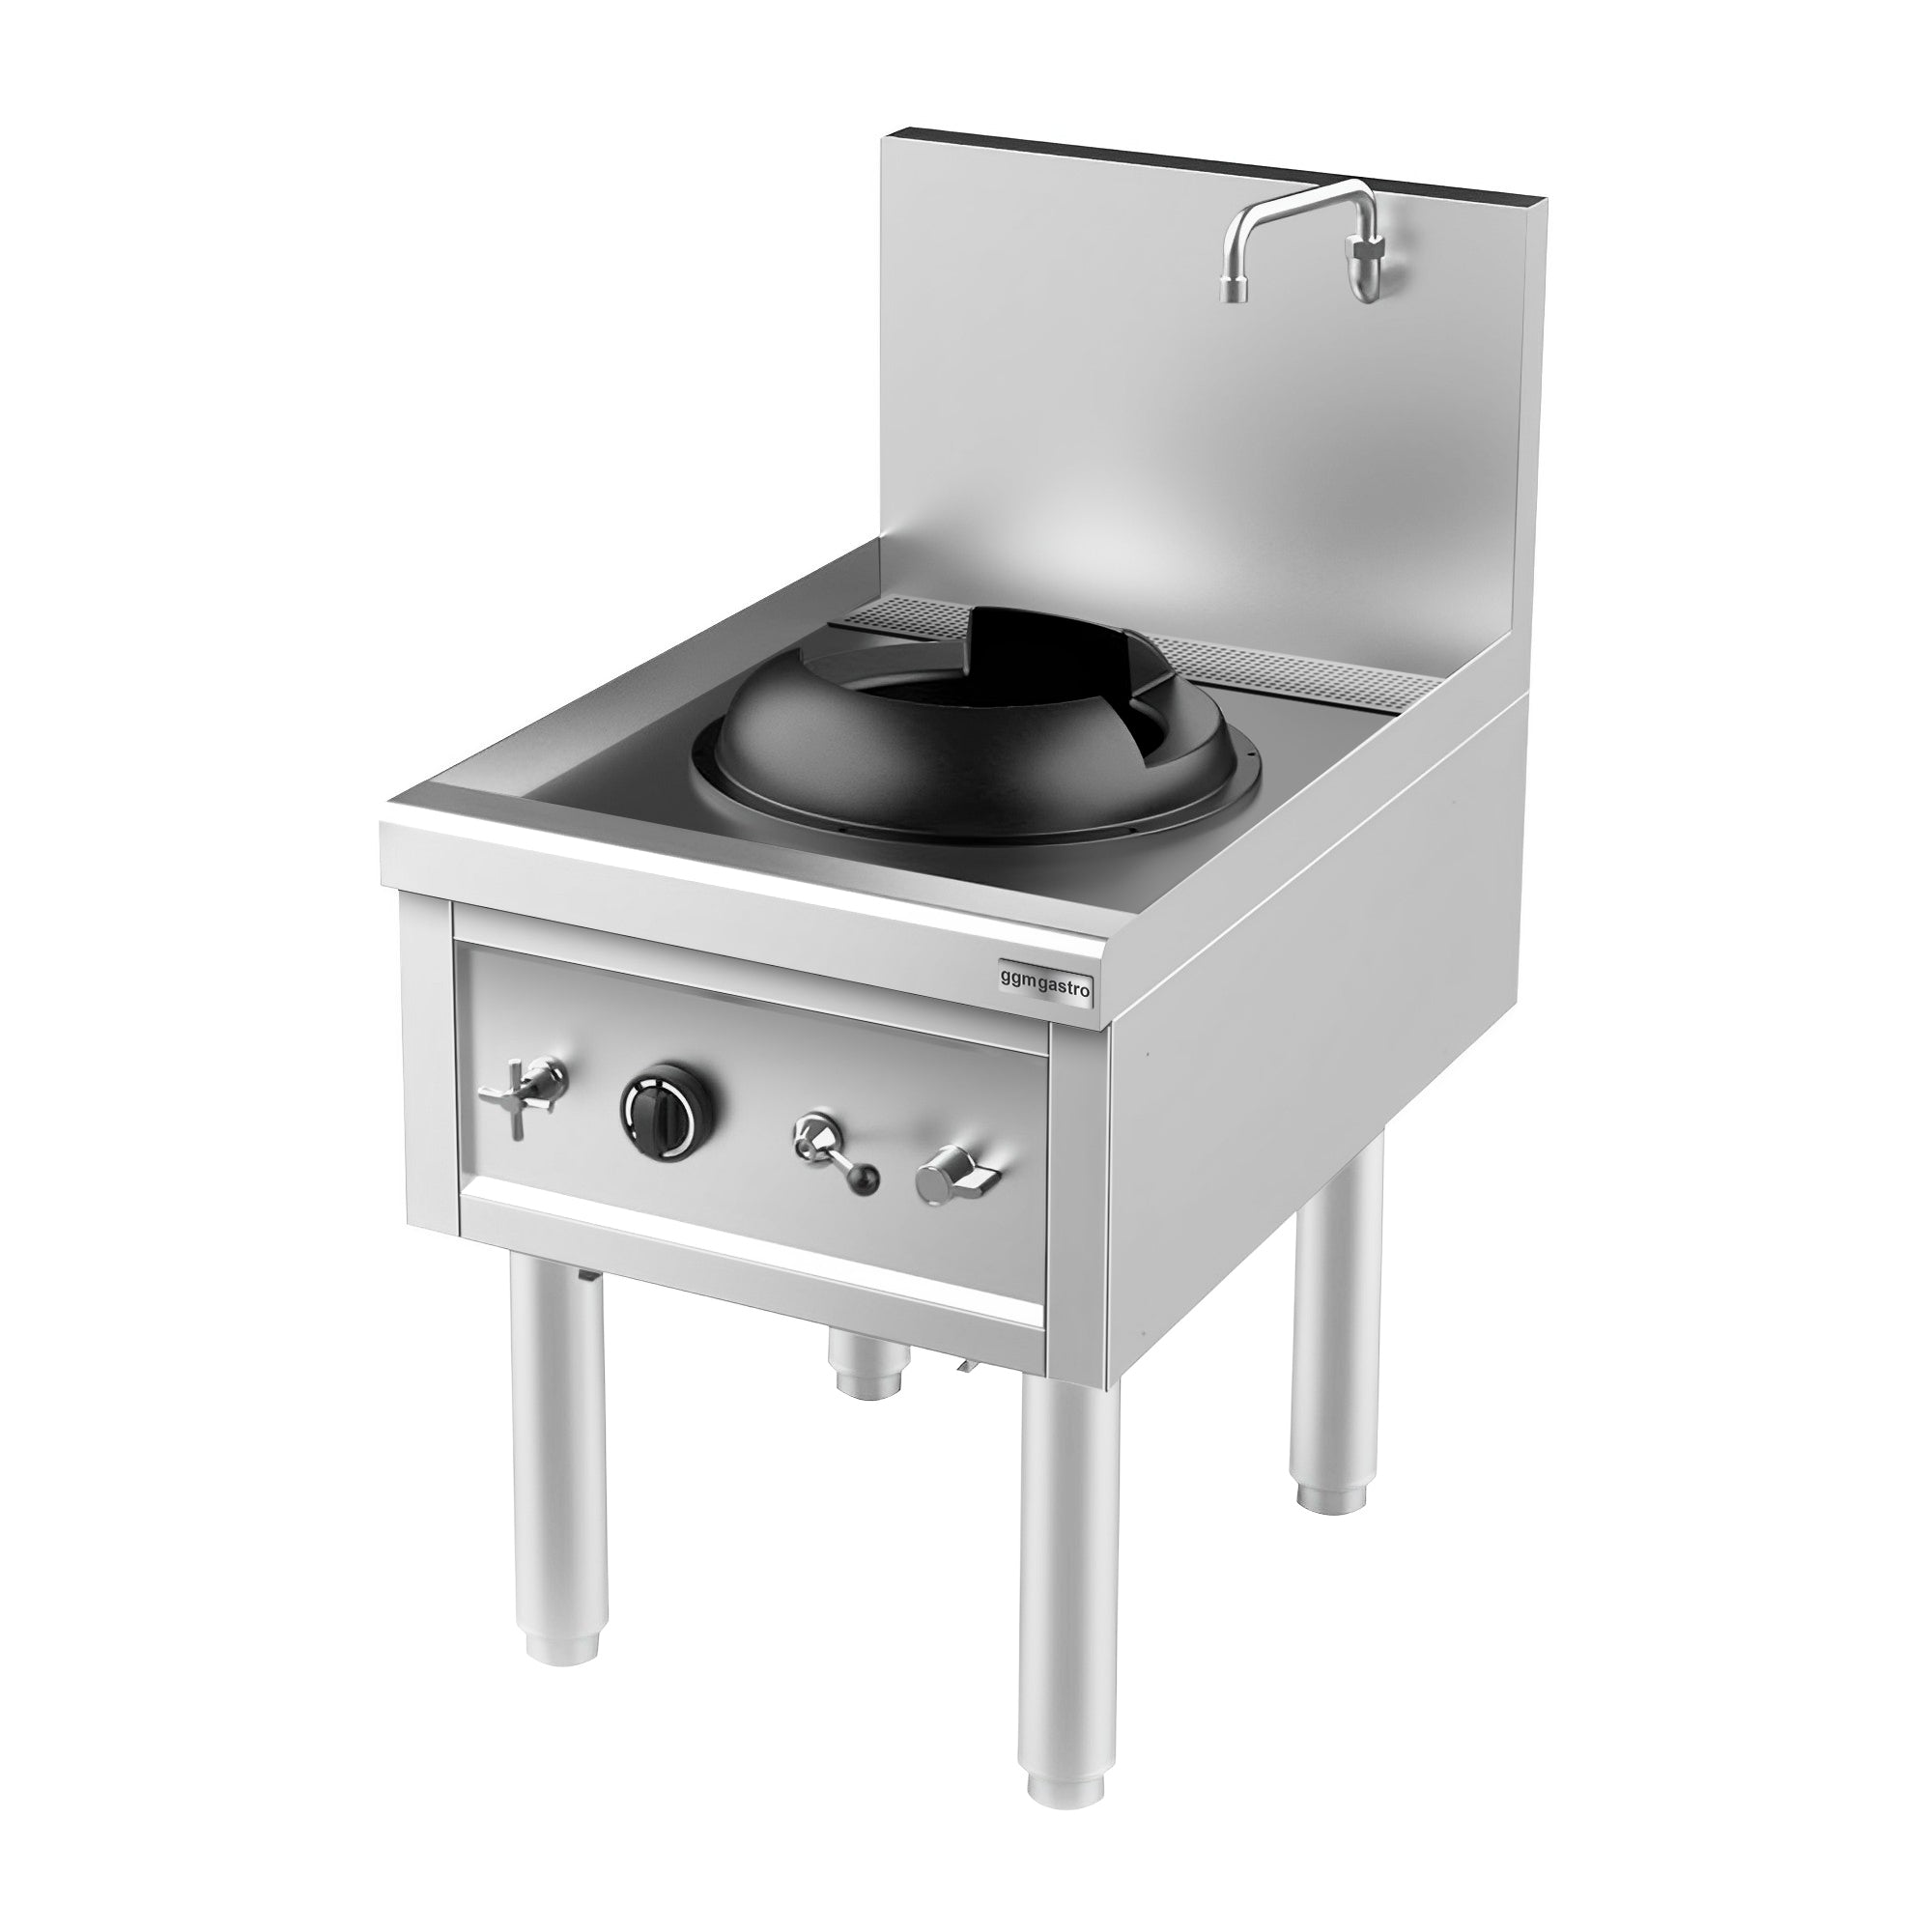 Gass wok komfyr - med 1 kokesone - 27,5 kW